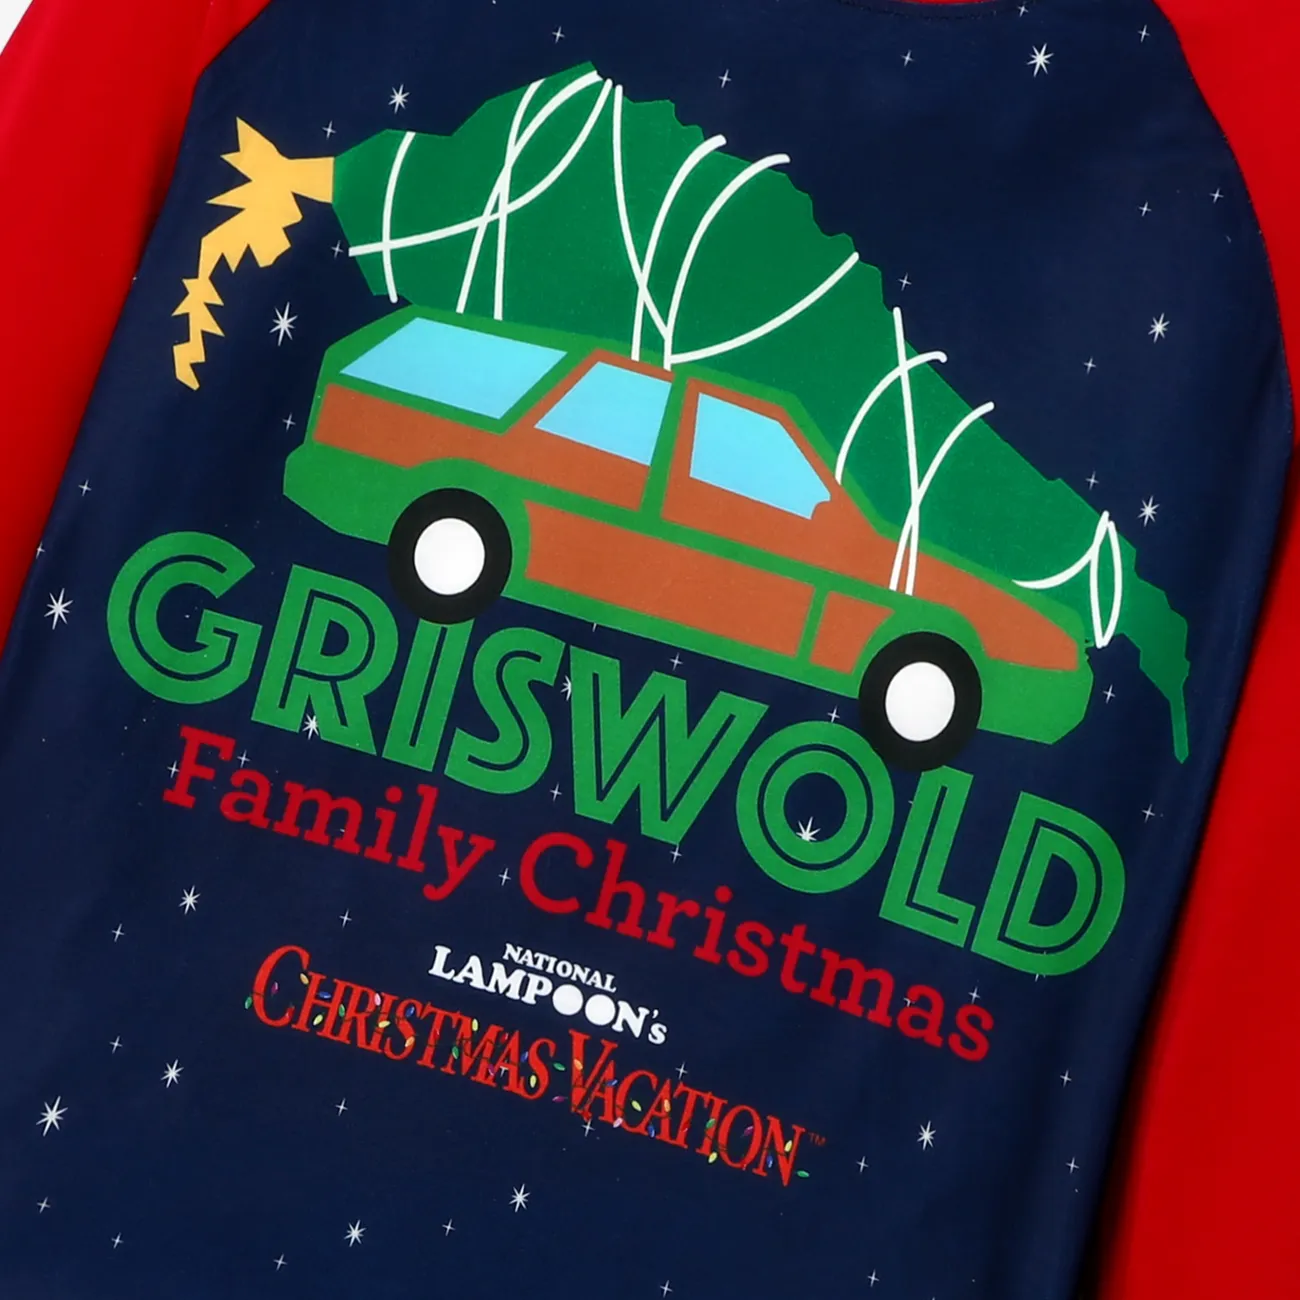 Christmas Vacation Family Matching Character Print Top and Pants Pajamas Sets(Flame Resistant) Multi-color big image 1